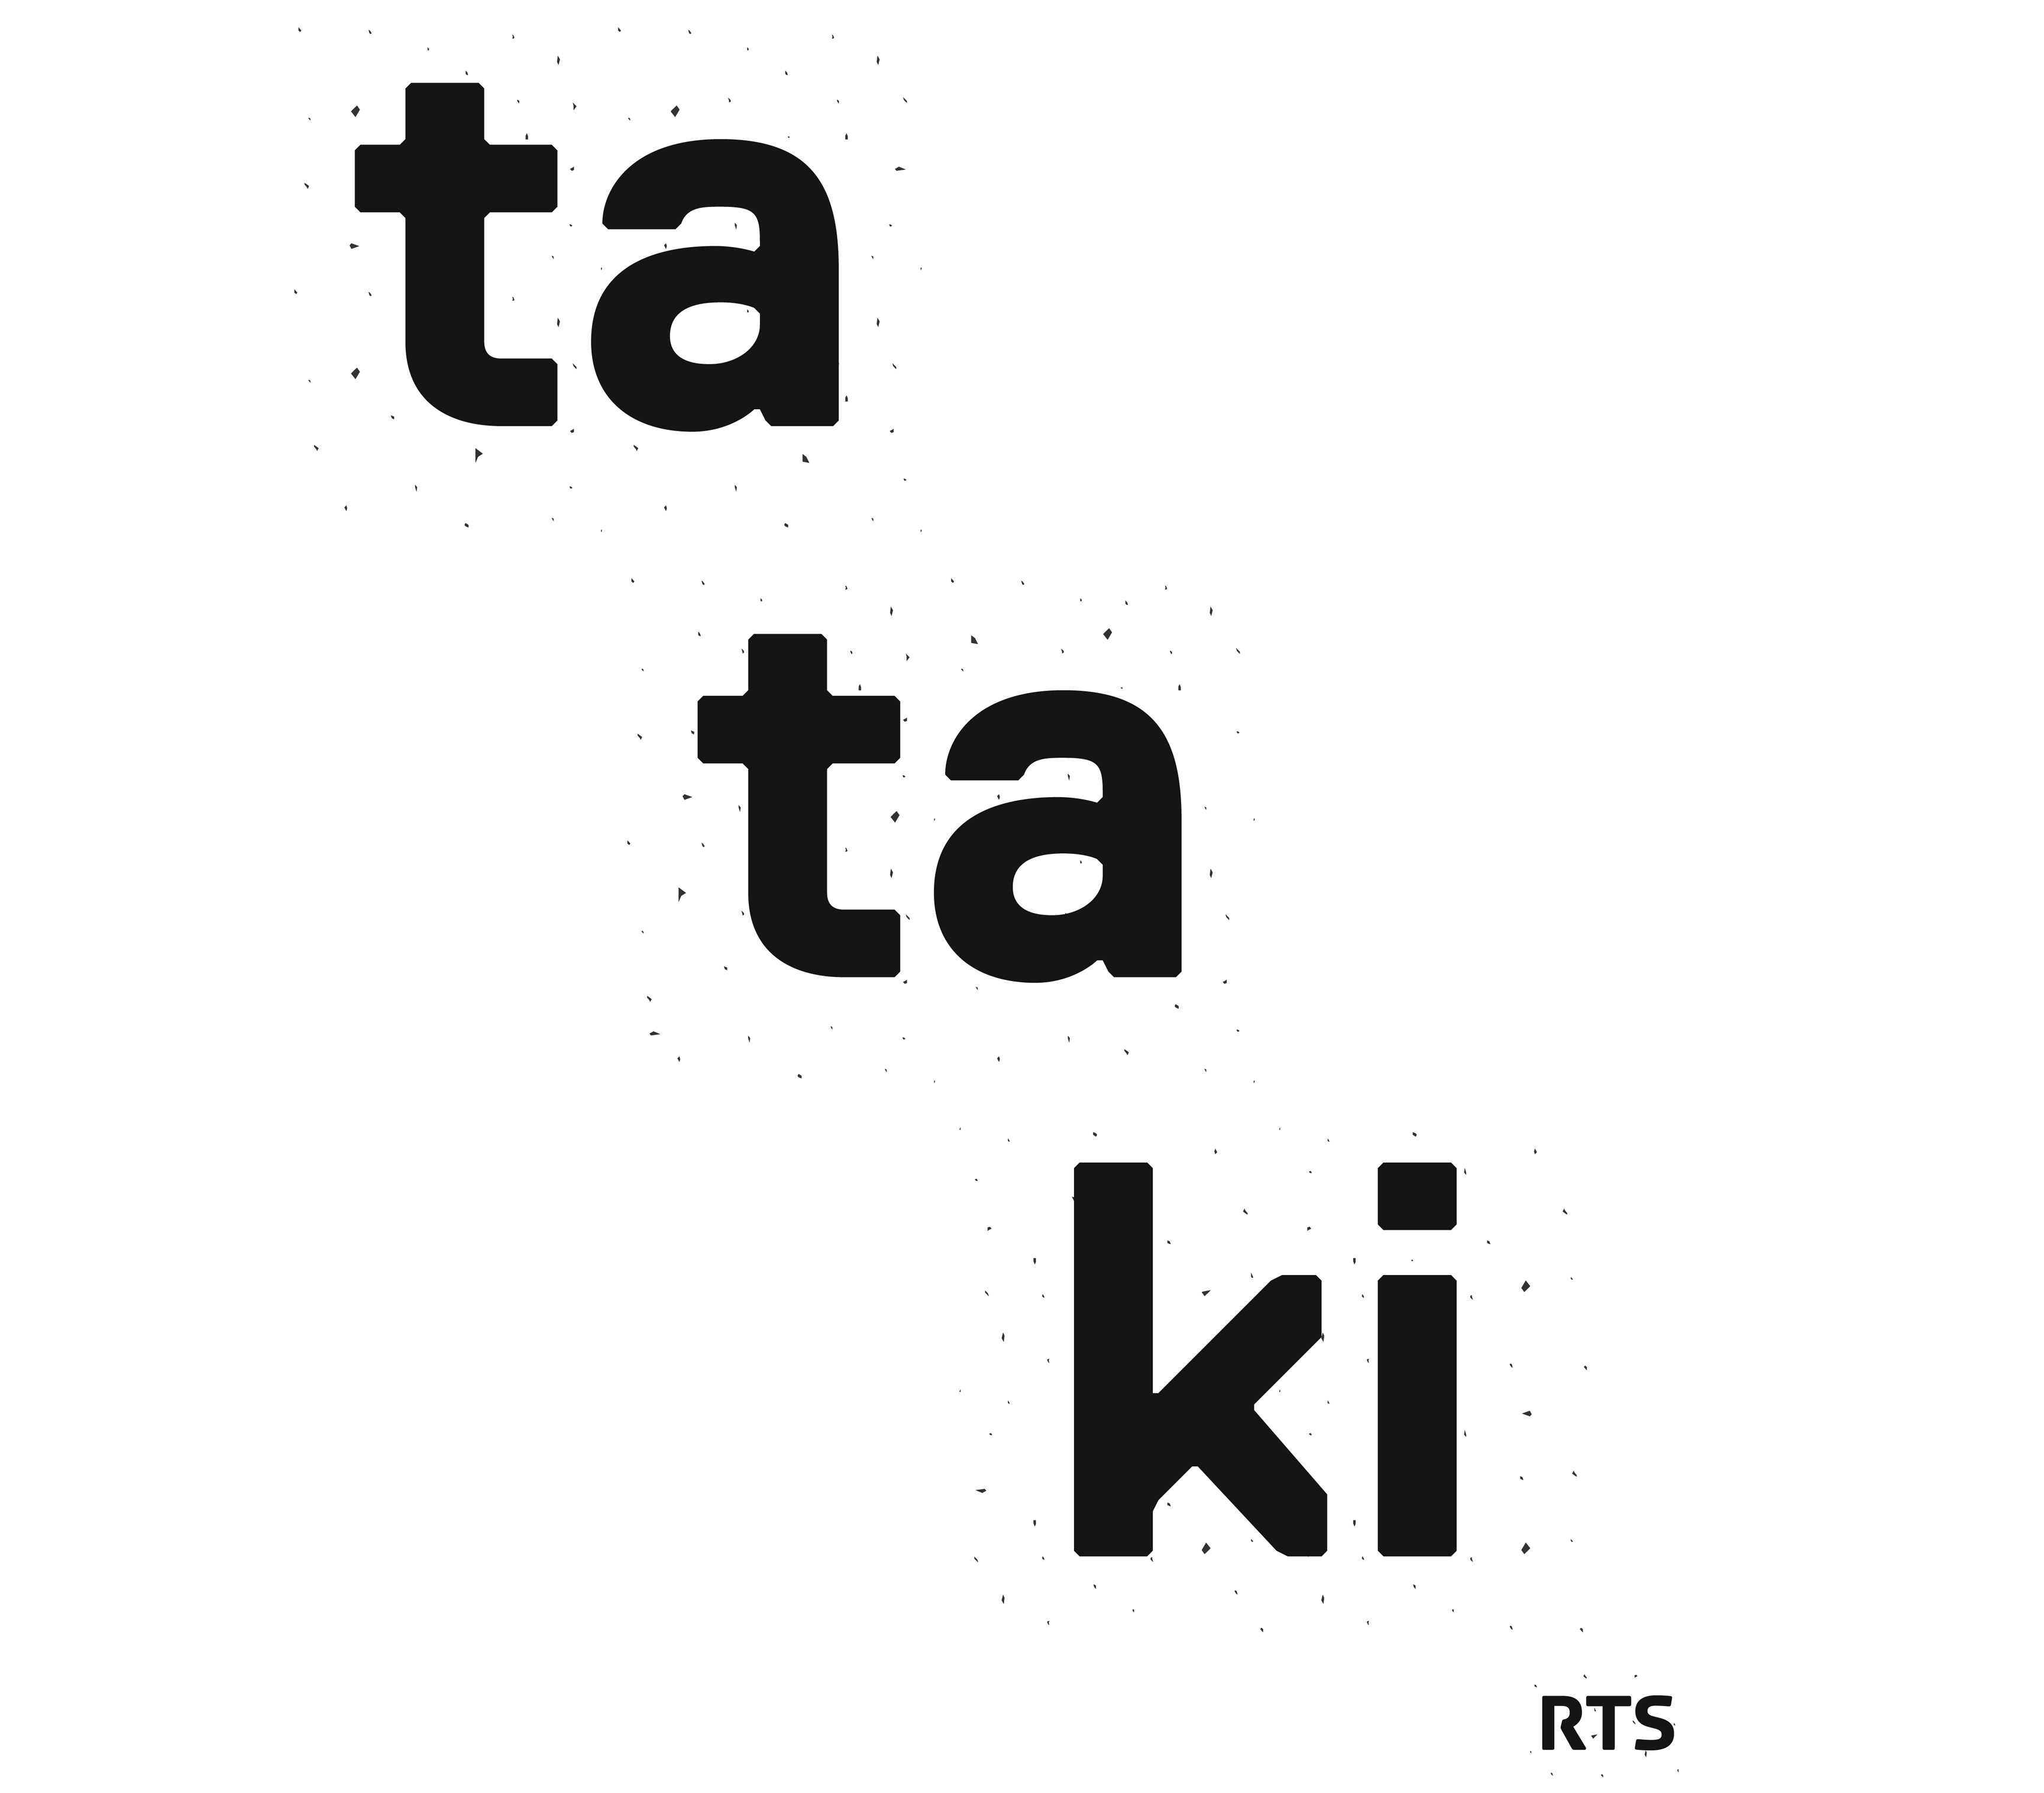 Tataki